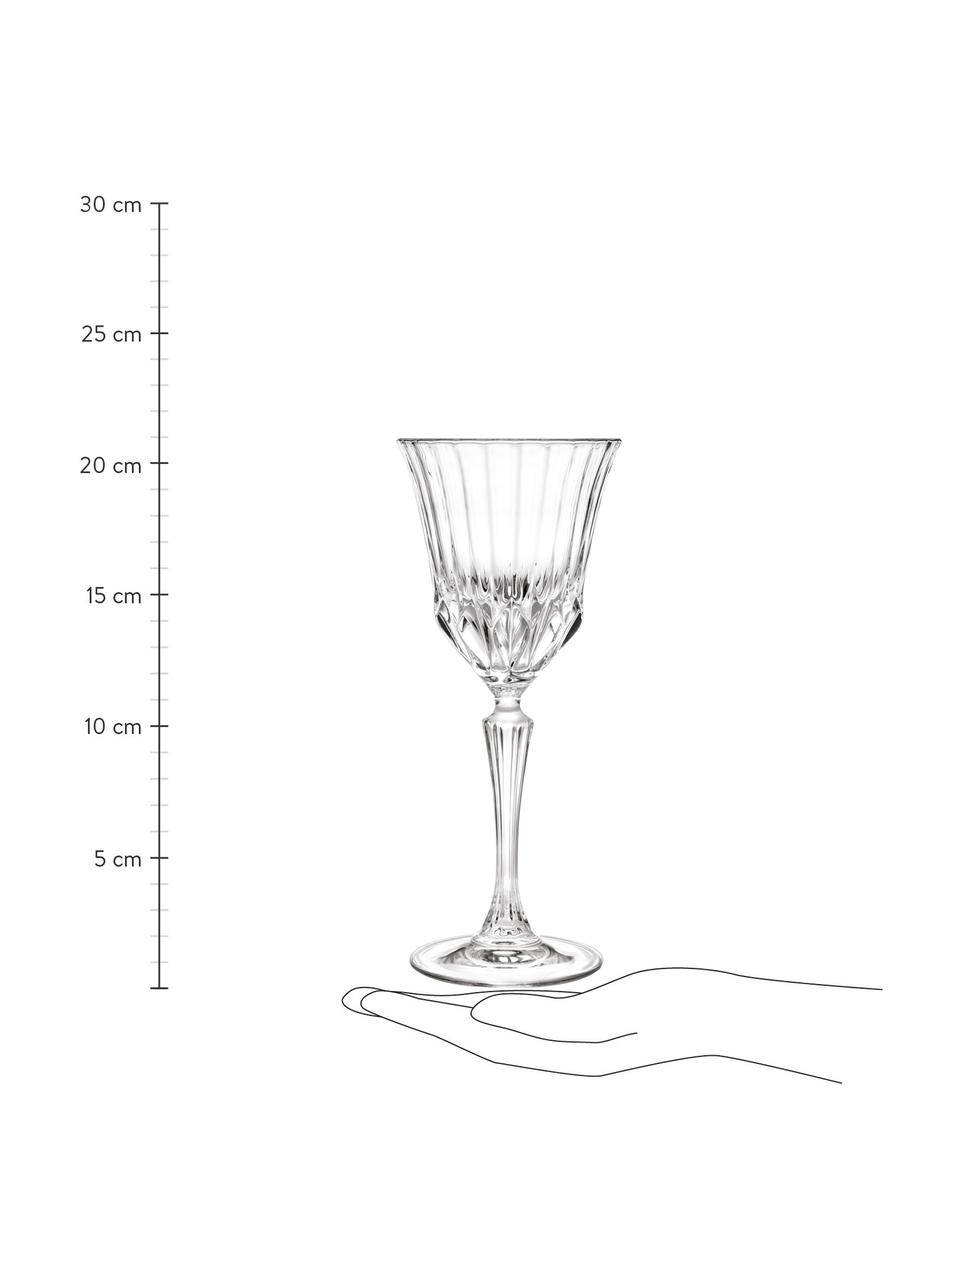 Kristallen wijnglazen Adagio met reliëf, 6 stuks, Kristalglas, Transparant, Ø 9 x H 21 cm, 280 ml